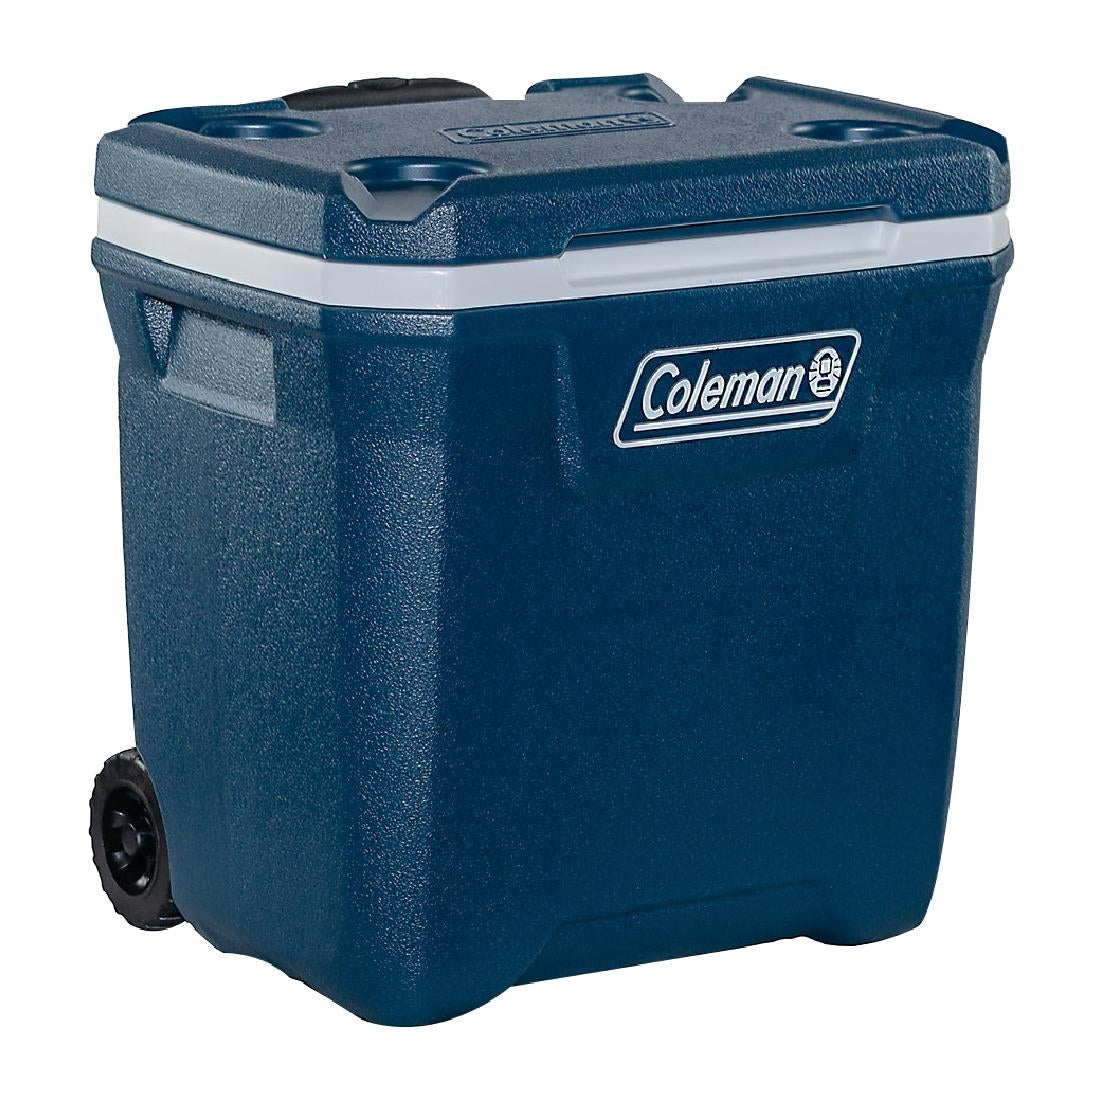 CX040 Coleman Xtreme Cooler Blue 26.5Ltr JD Catering Equipment Solutions Ltd